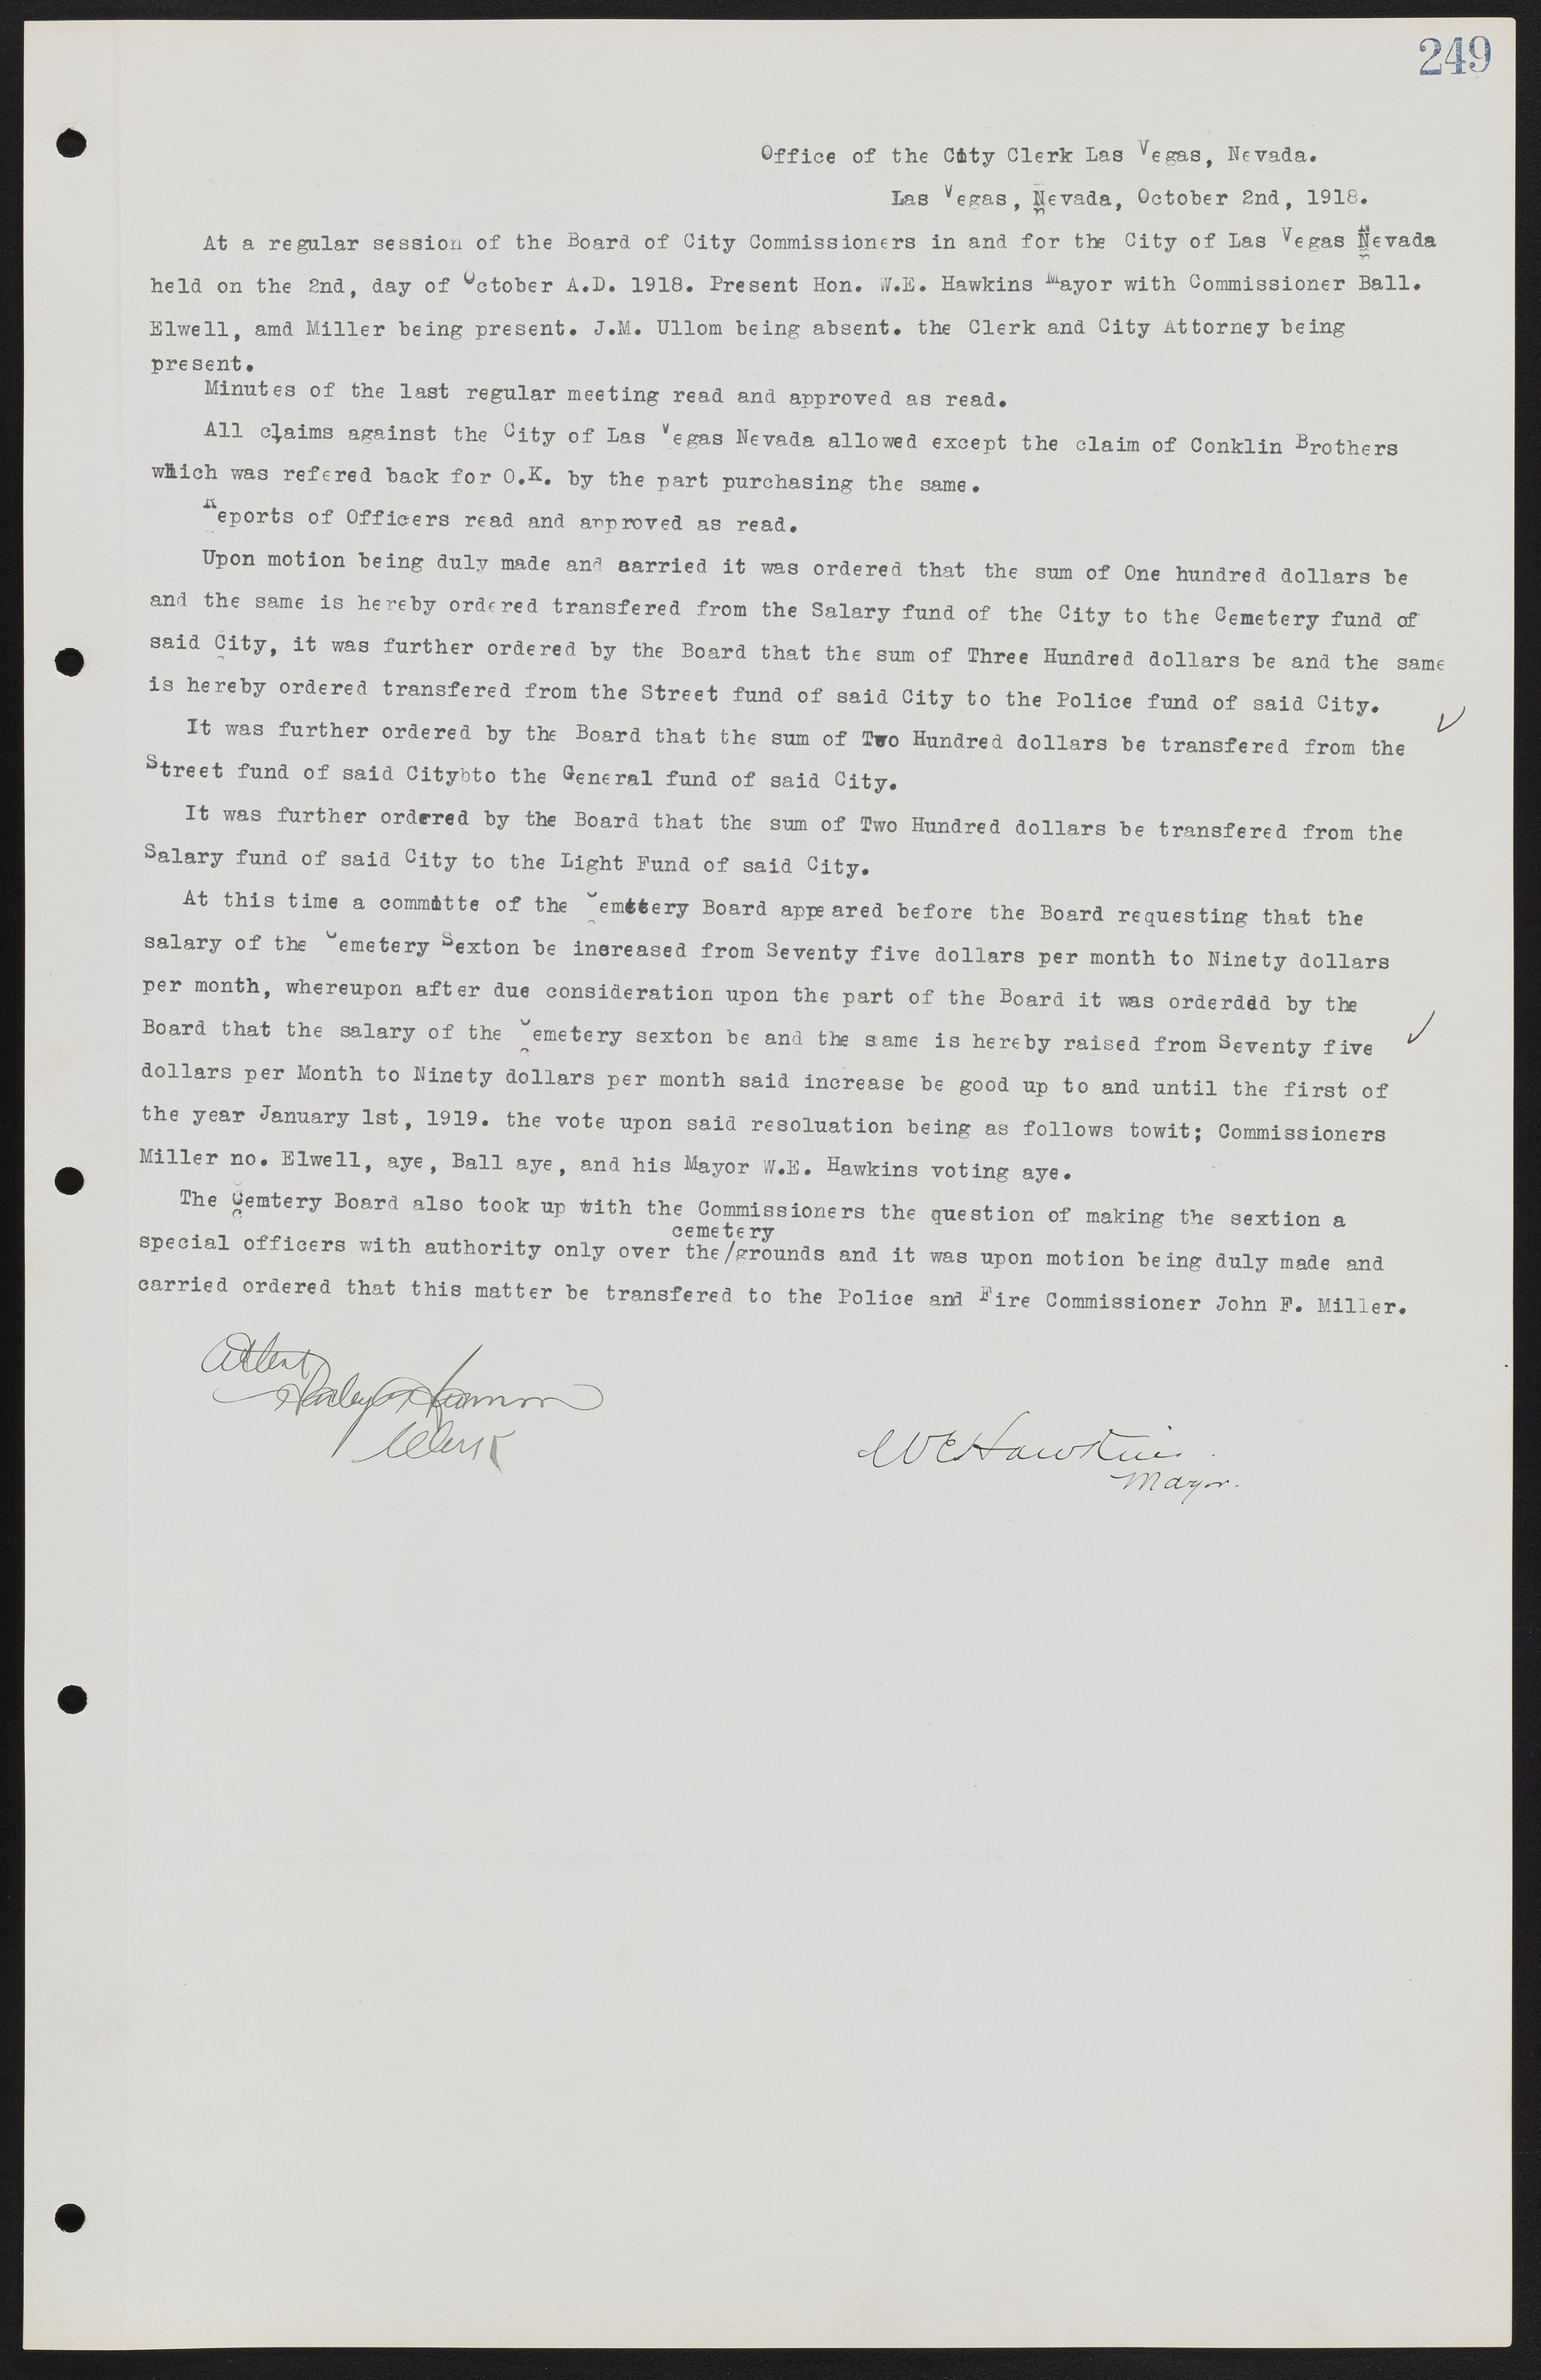 Las Vegas City Commission Minutes, June 22, 1911 to February 7, 1922, lvc000001-265